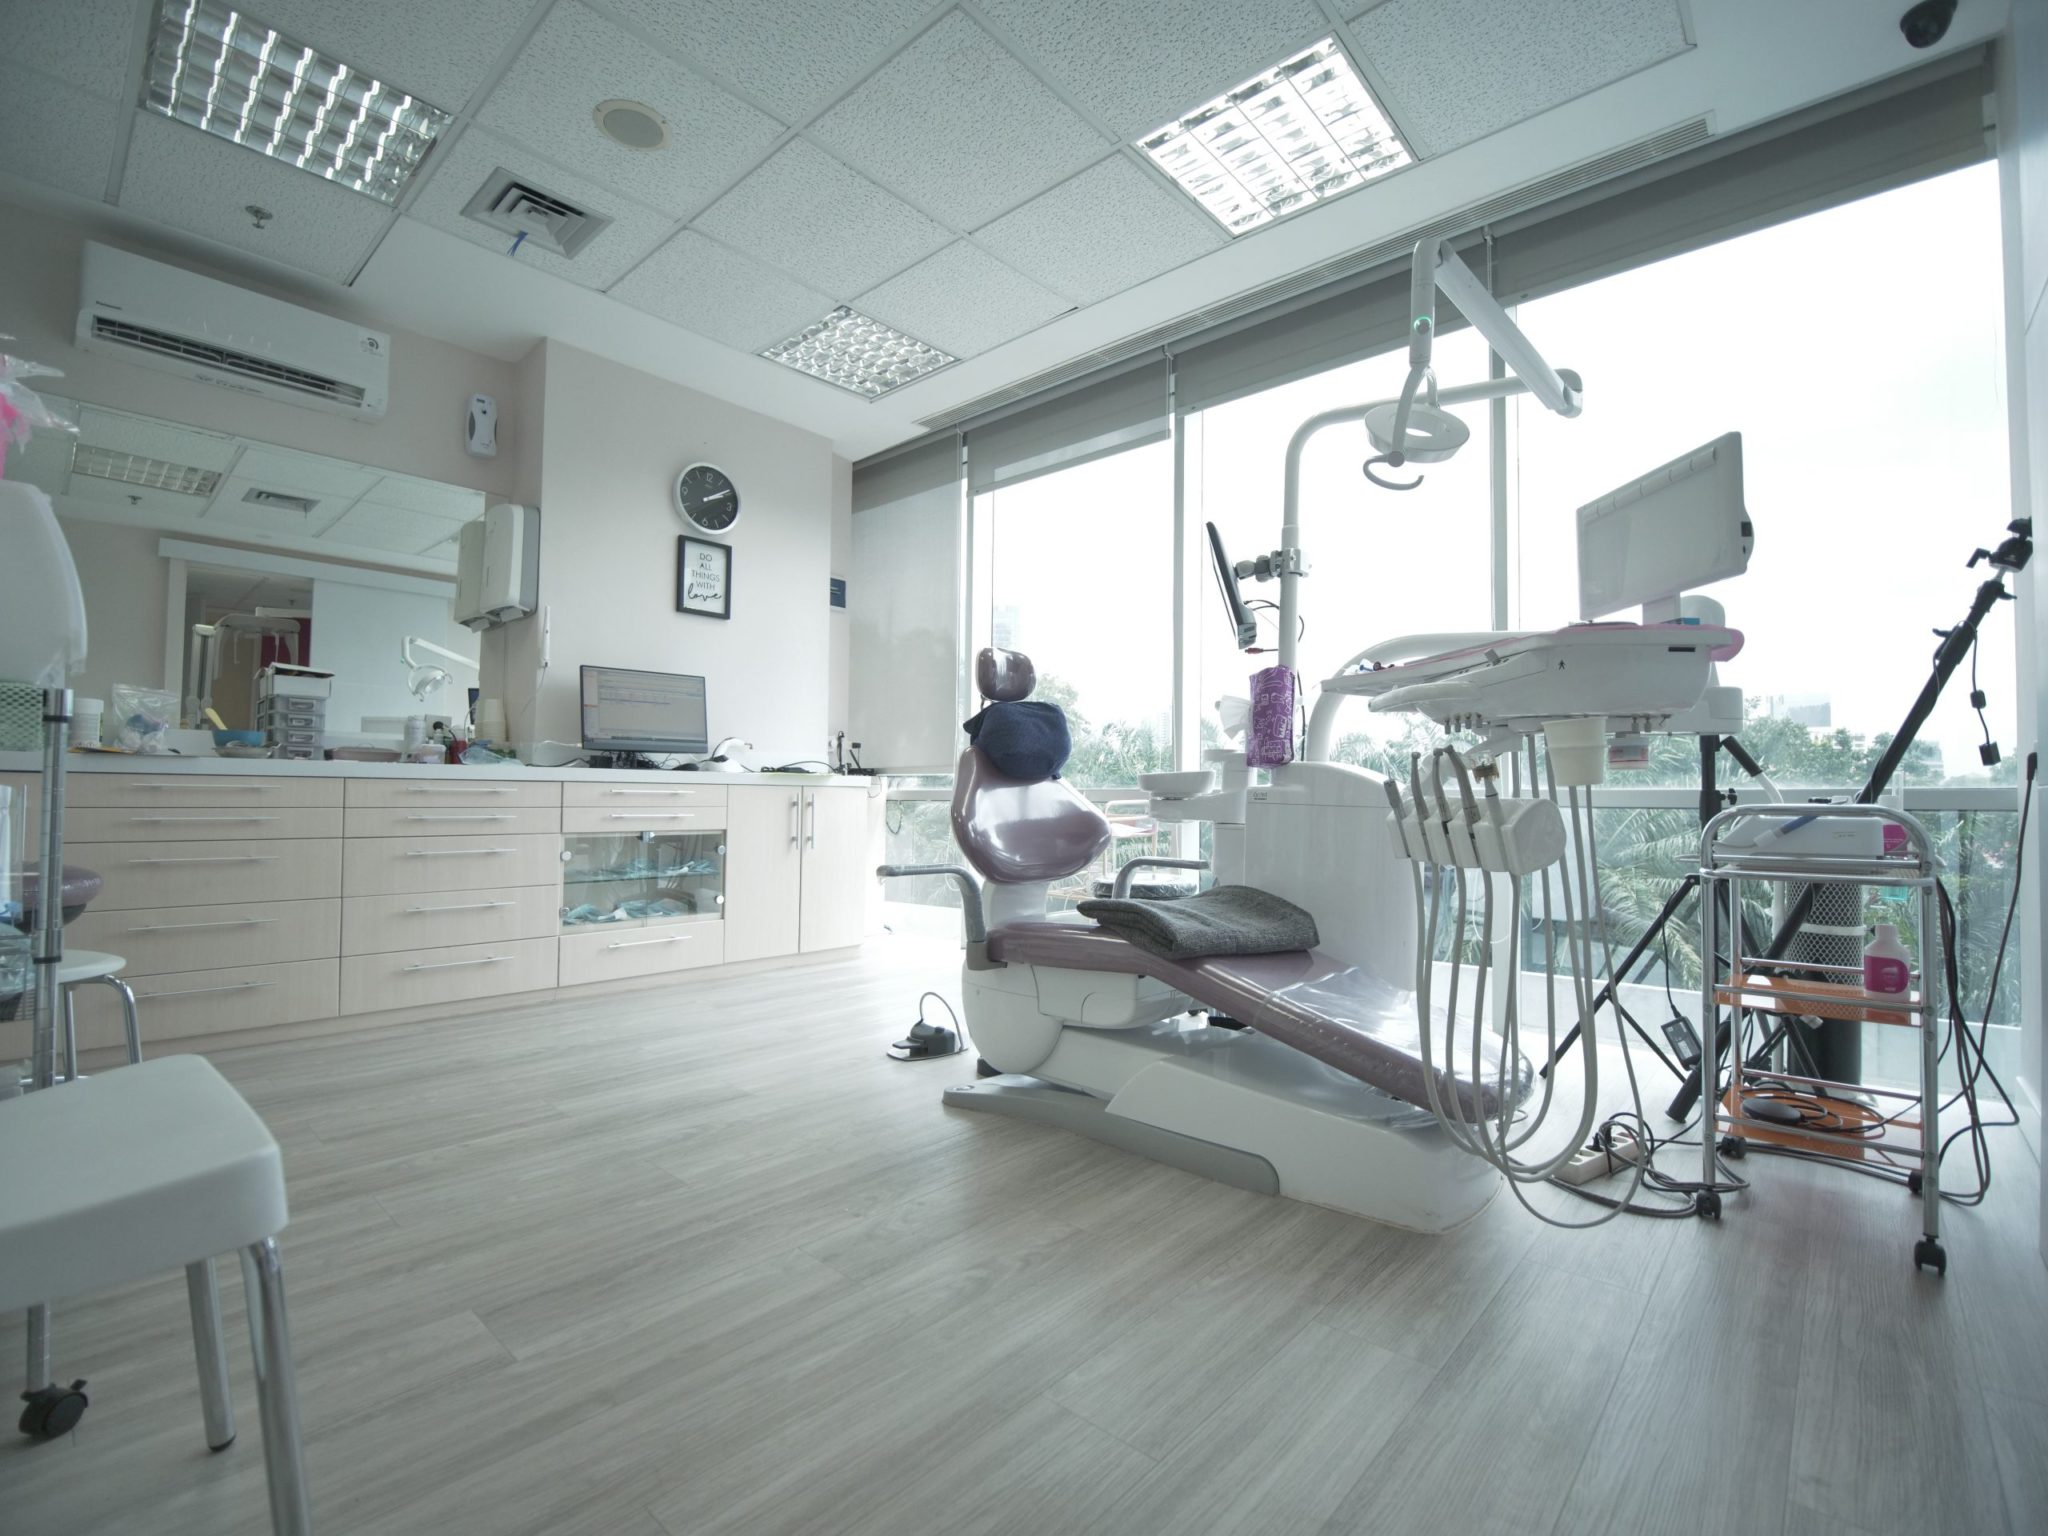 Klinik Perawatan Gigi Terbaik di Jakarta | Flokq Coliving Jakarta Blog